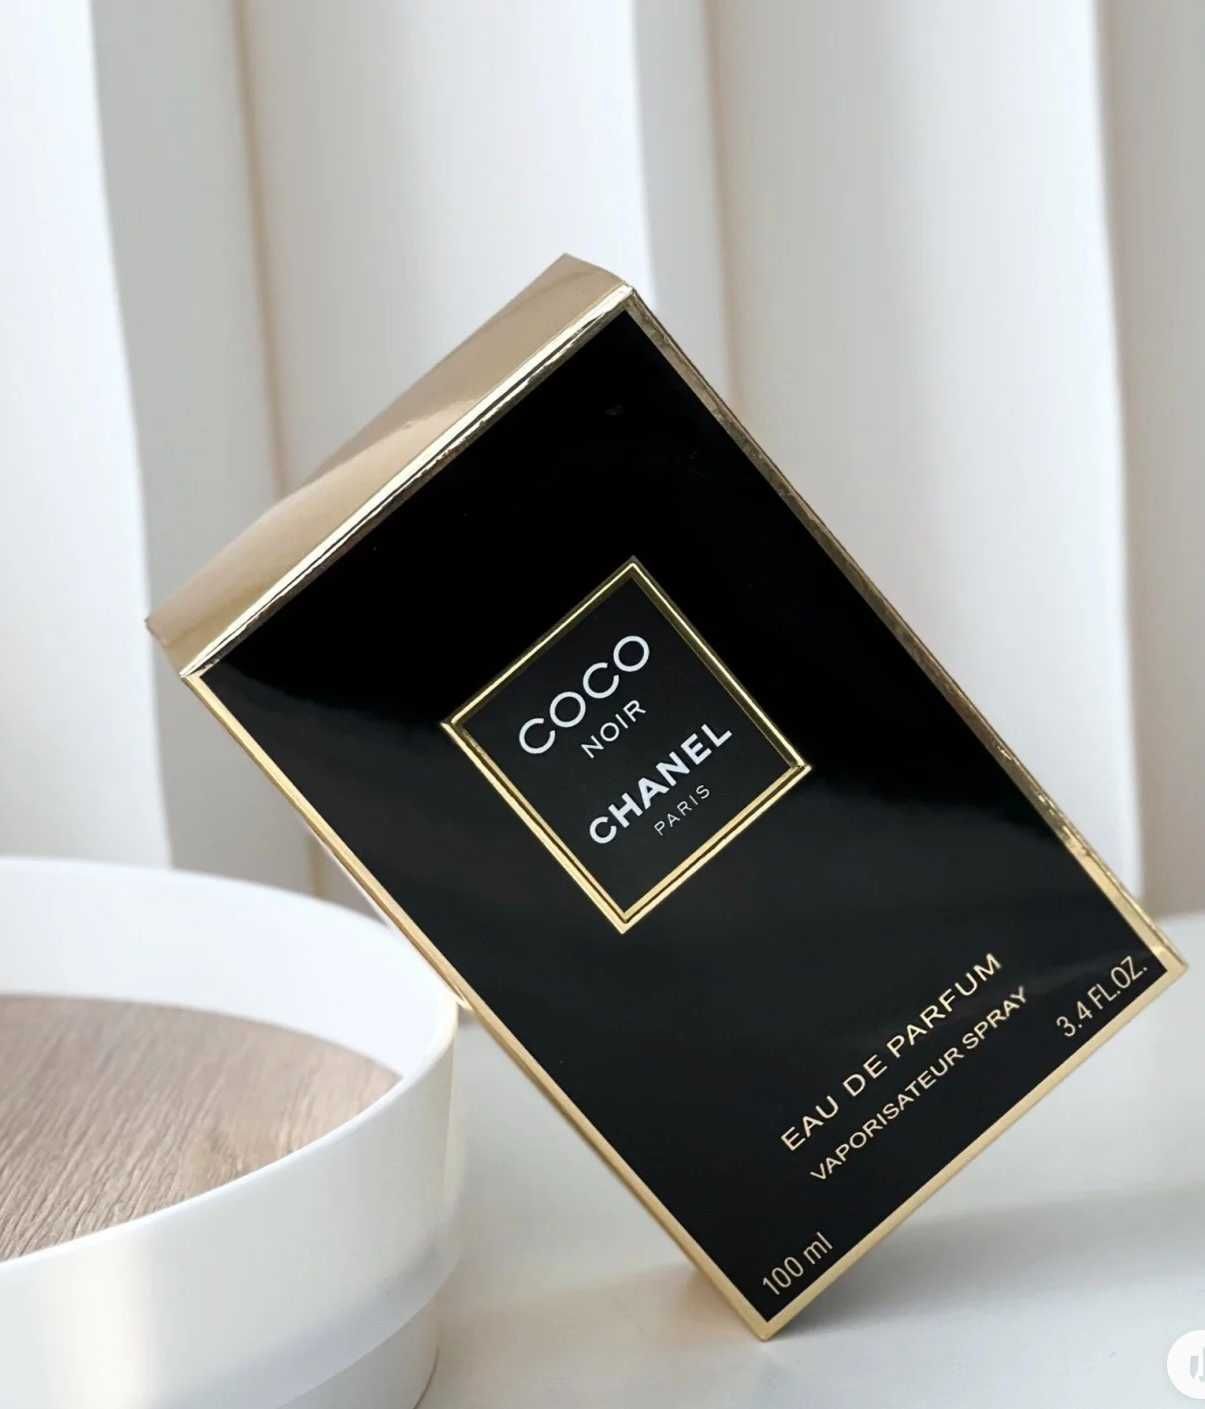 Woda perfumowana Coco Noir Chanel 100ml